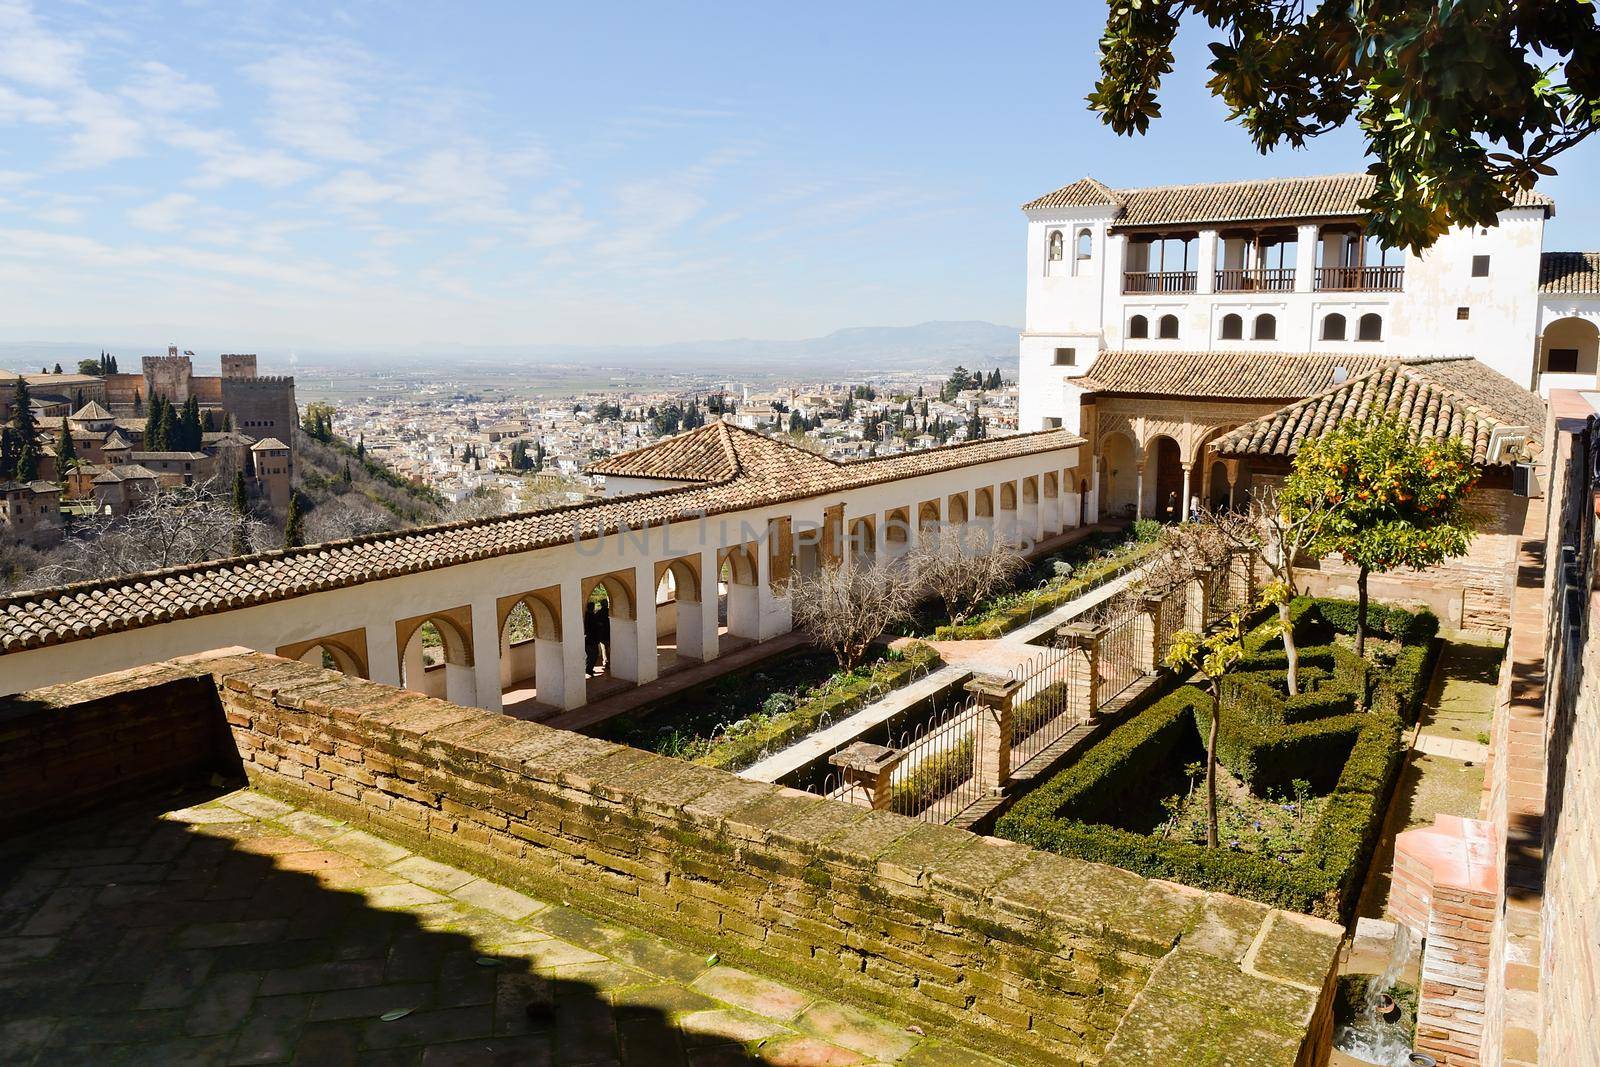 Courtyard of the acequia in Generalife, Alhambra, Granada by javiindy